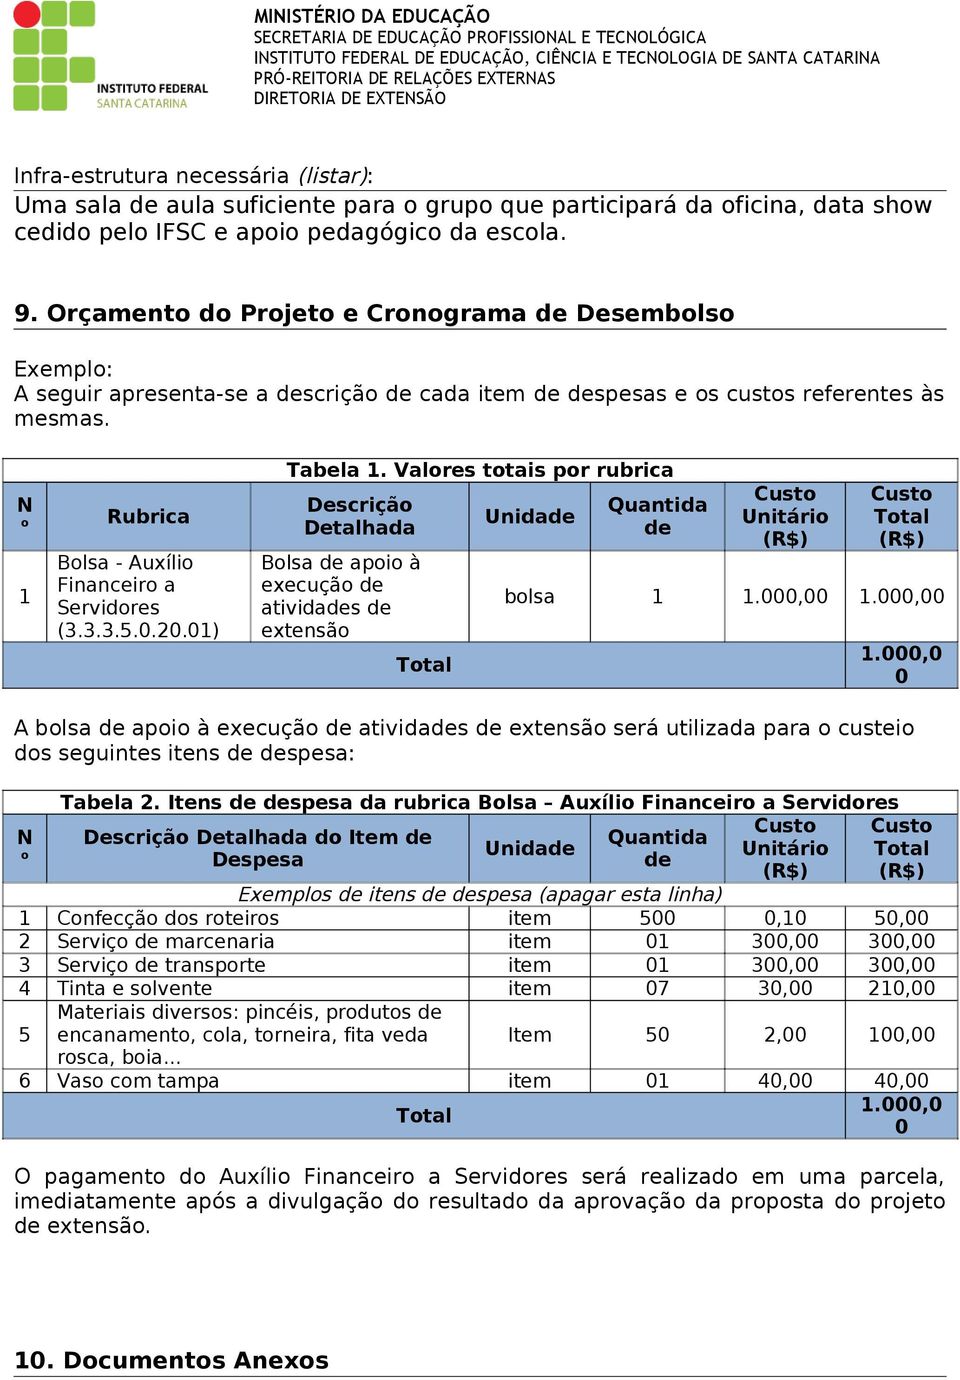 N o 1 Rubrica Bolsa - Auxílio Financeiro a Servidores (3.3.3.5.0.20.01) Tabela 1.